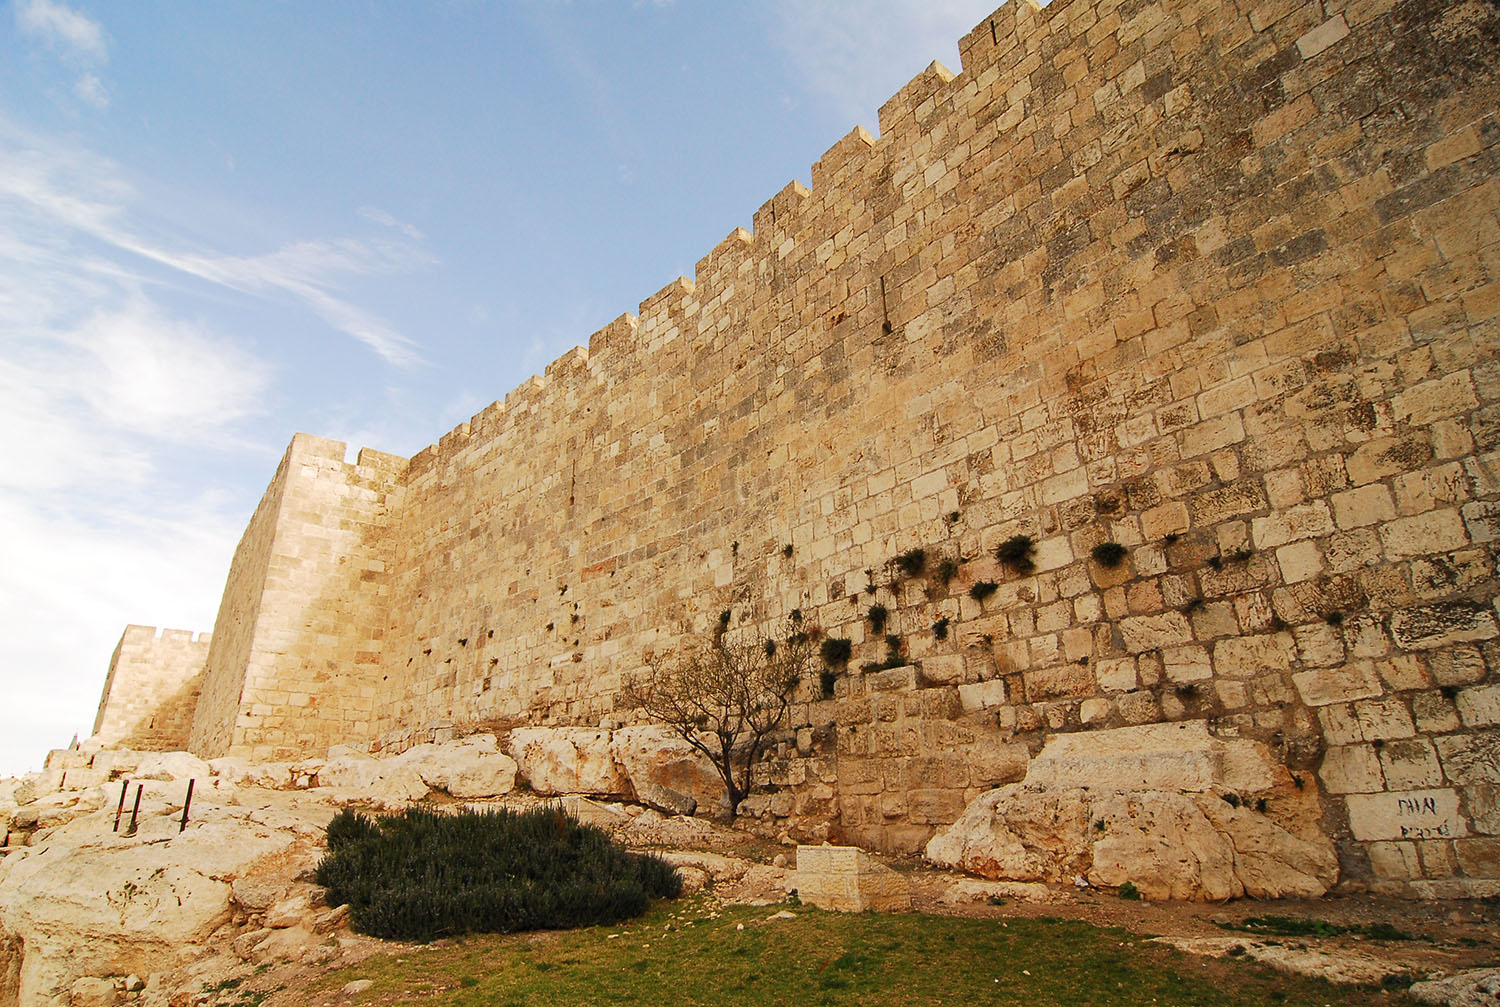 Outer_Wall_Old_City_of_Jerusalem.jpg